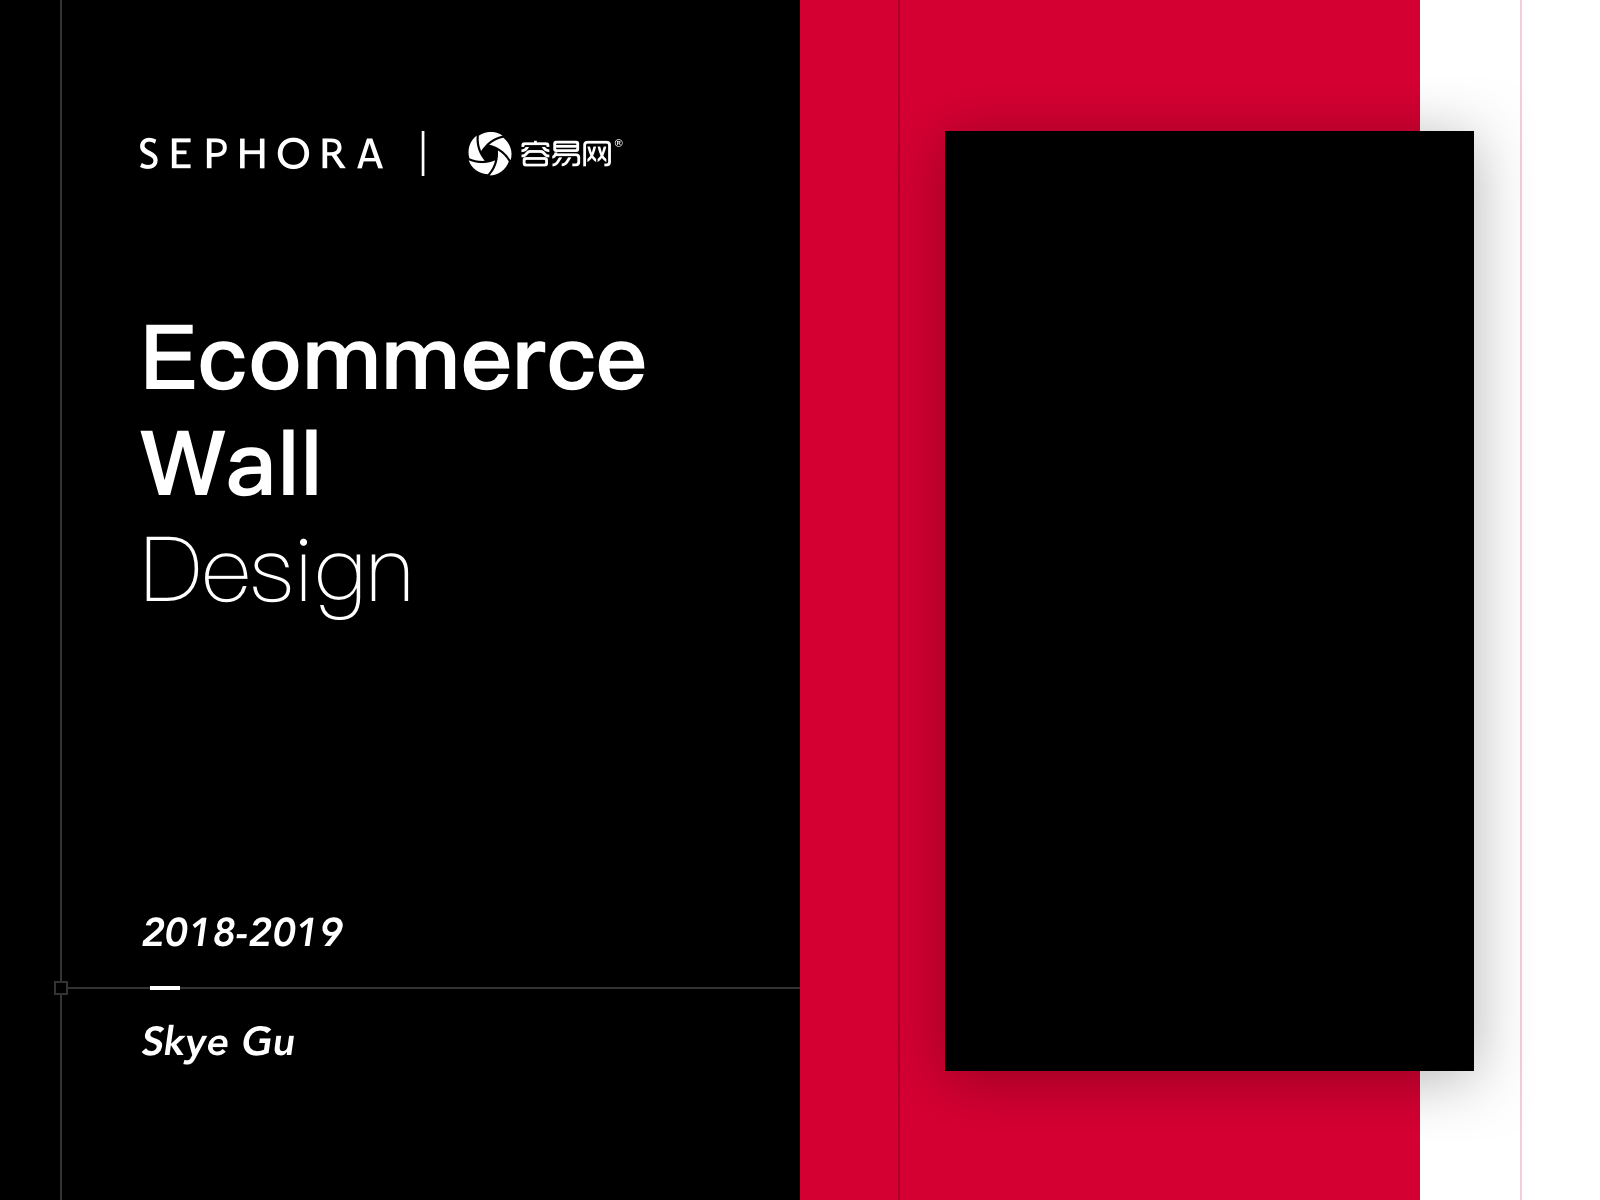 Sephora Ecommerce Wall / Cloud Shelf Design